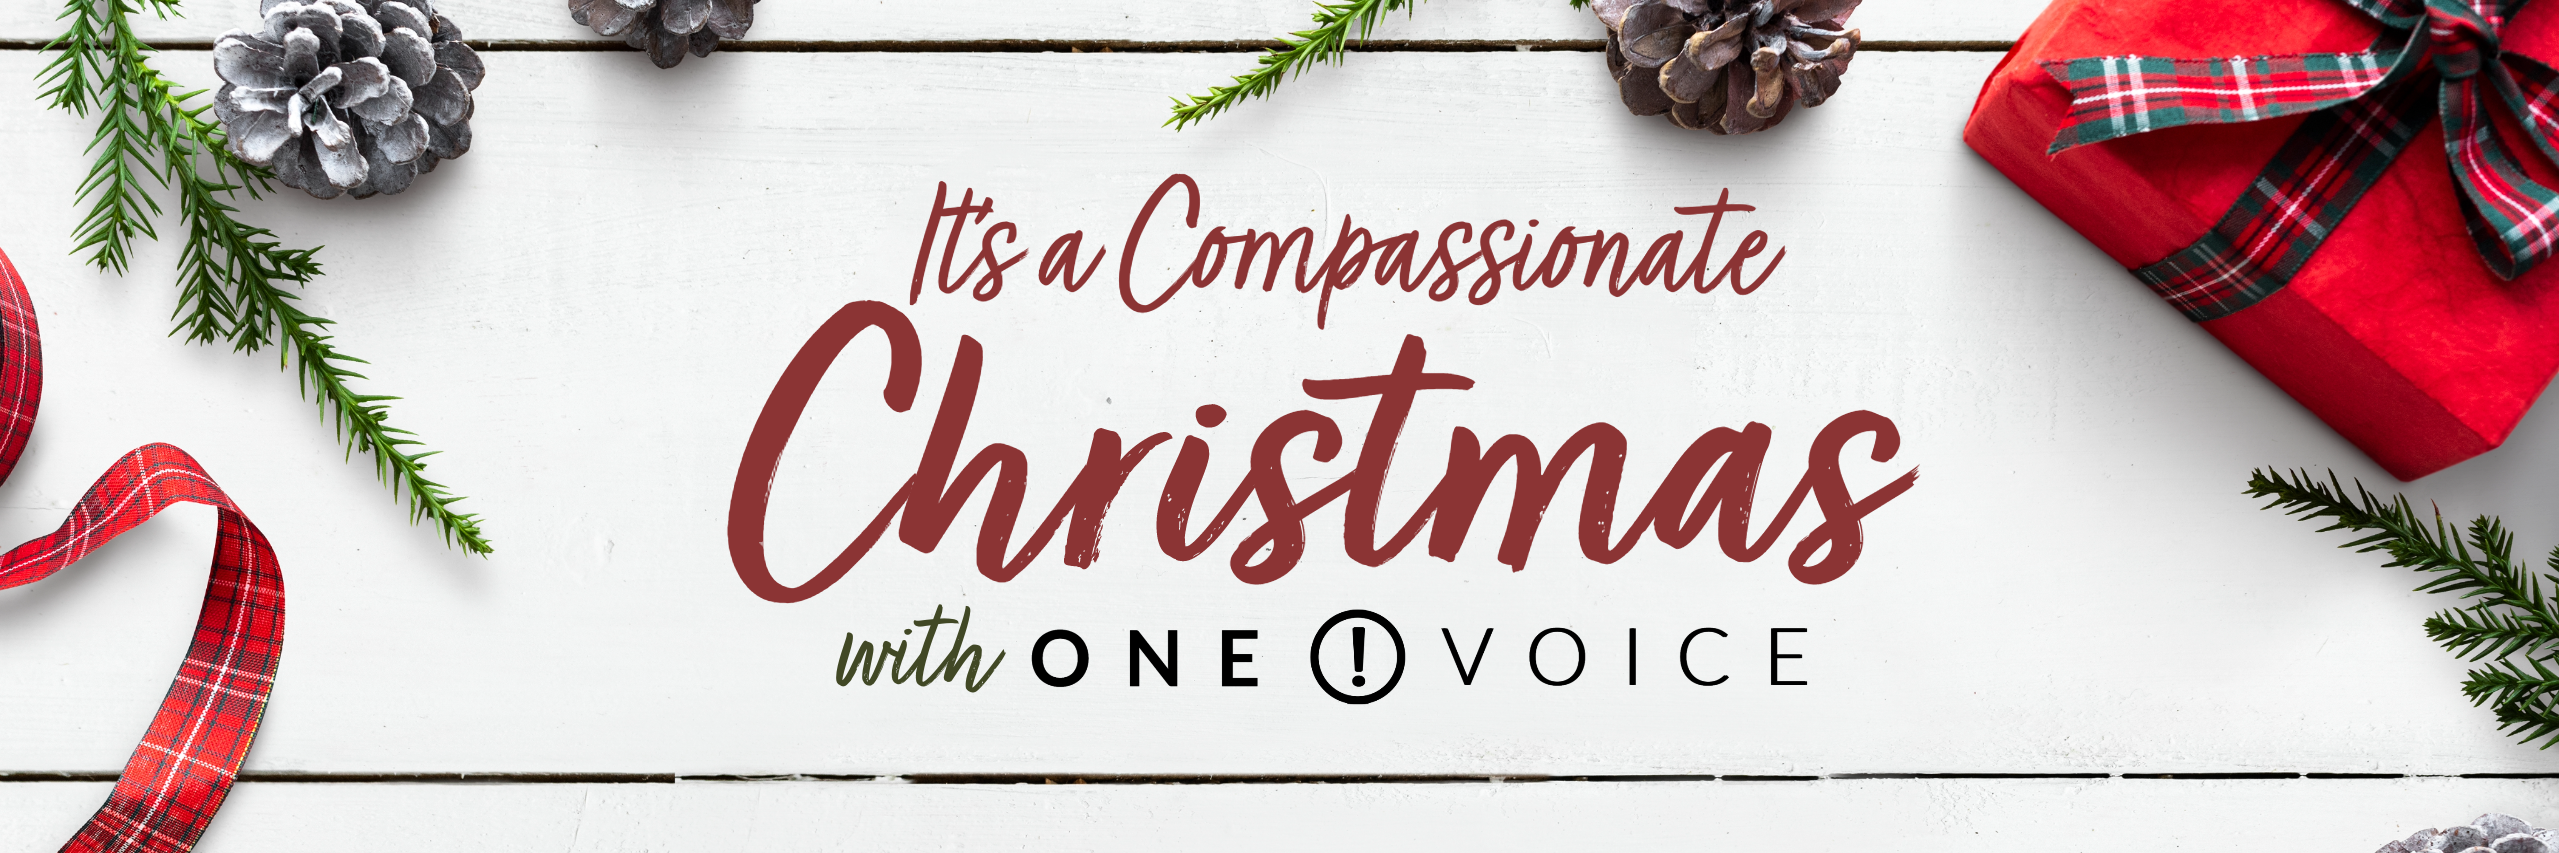 Compassionate Christmas